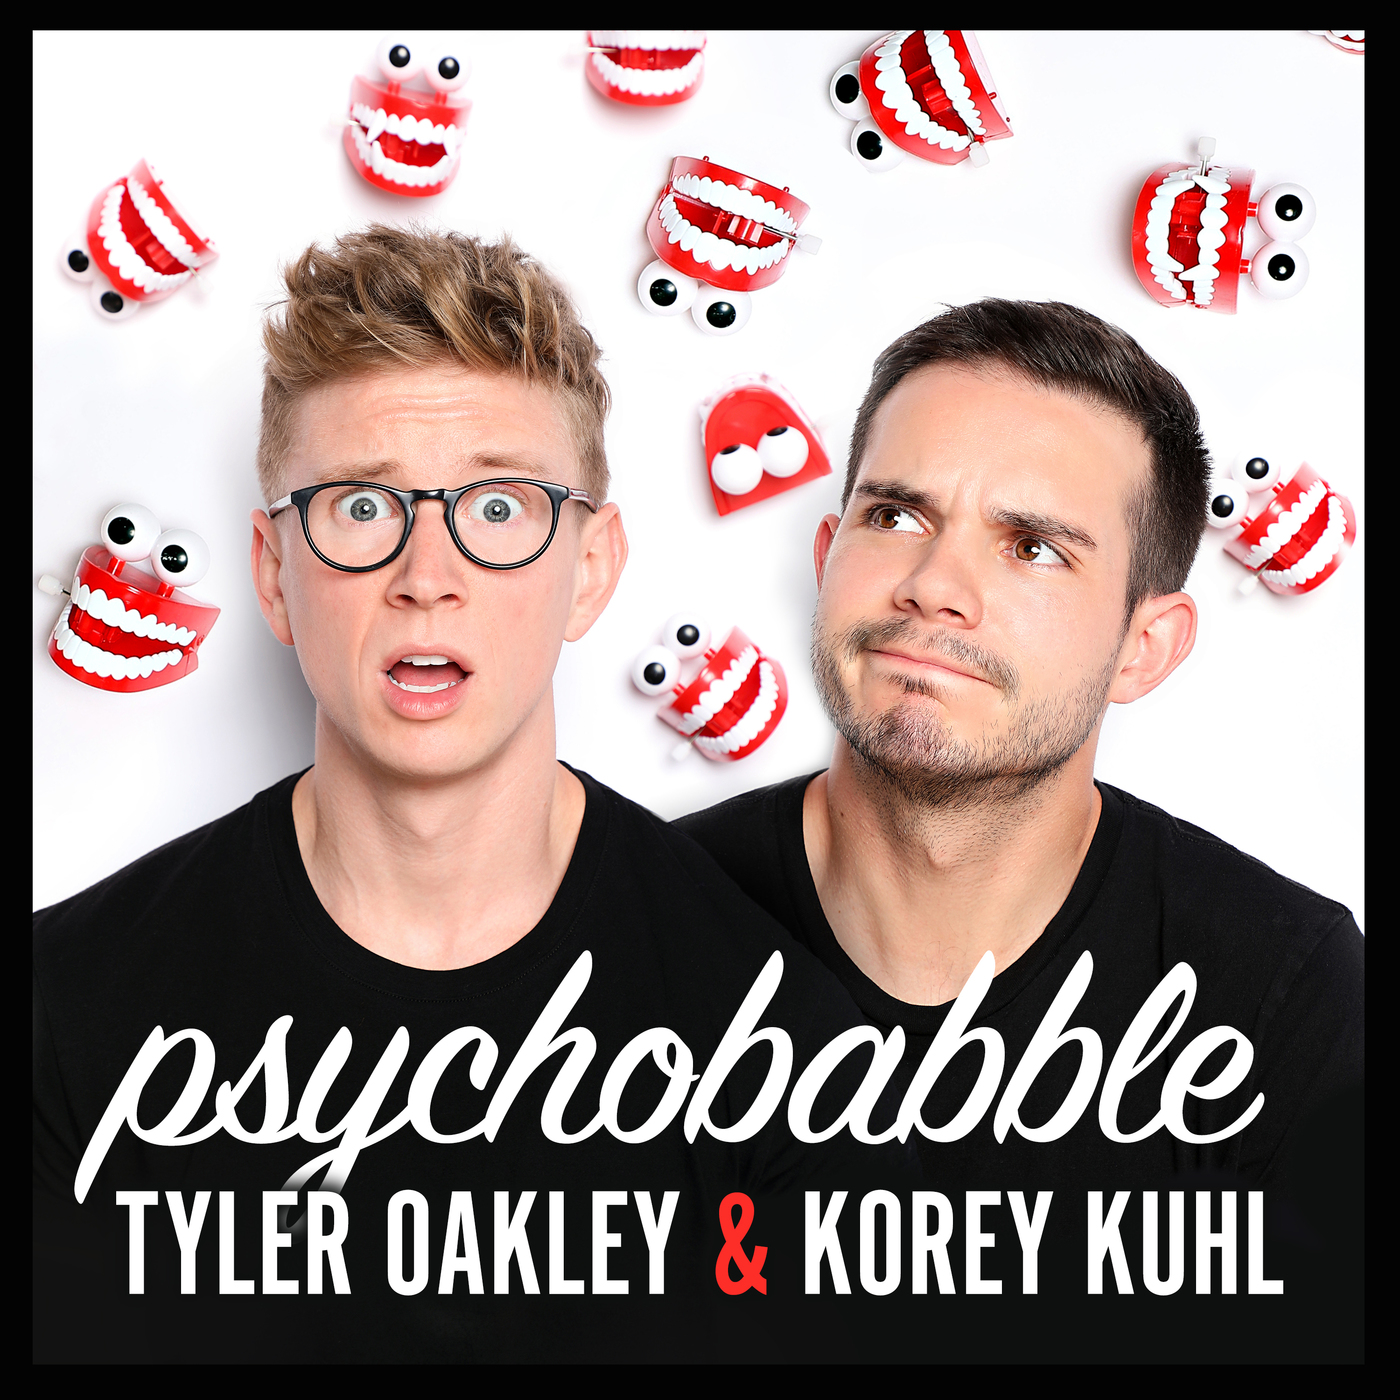 Meghan Trainer Shemale - Psychobabble - Tyler Oakley & Korey Kuhl Podcast | Cadence13